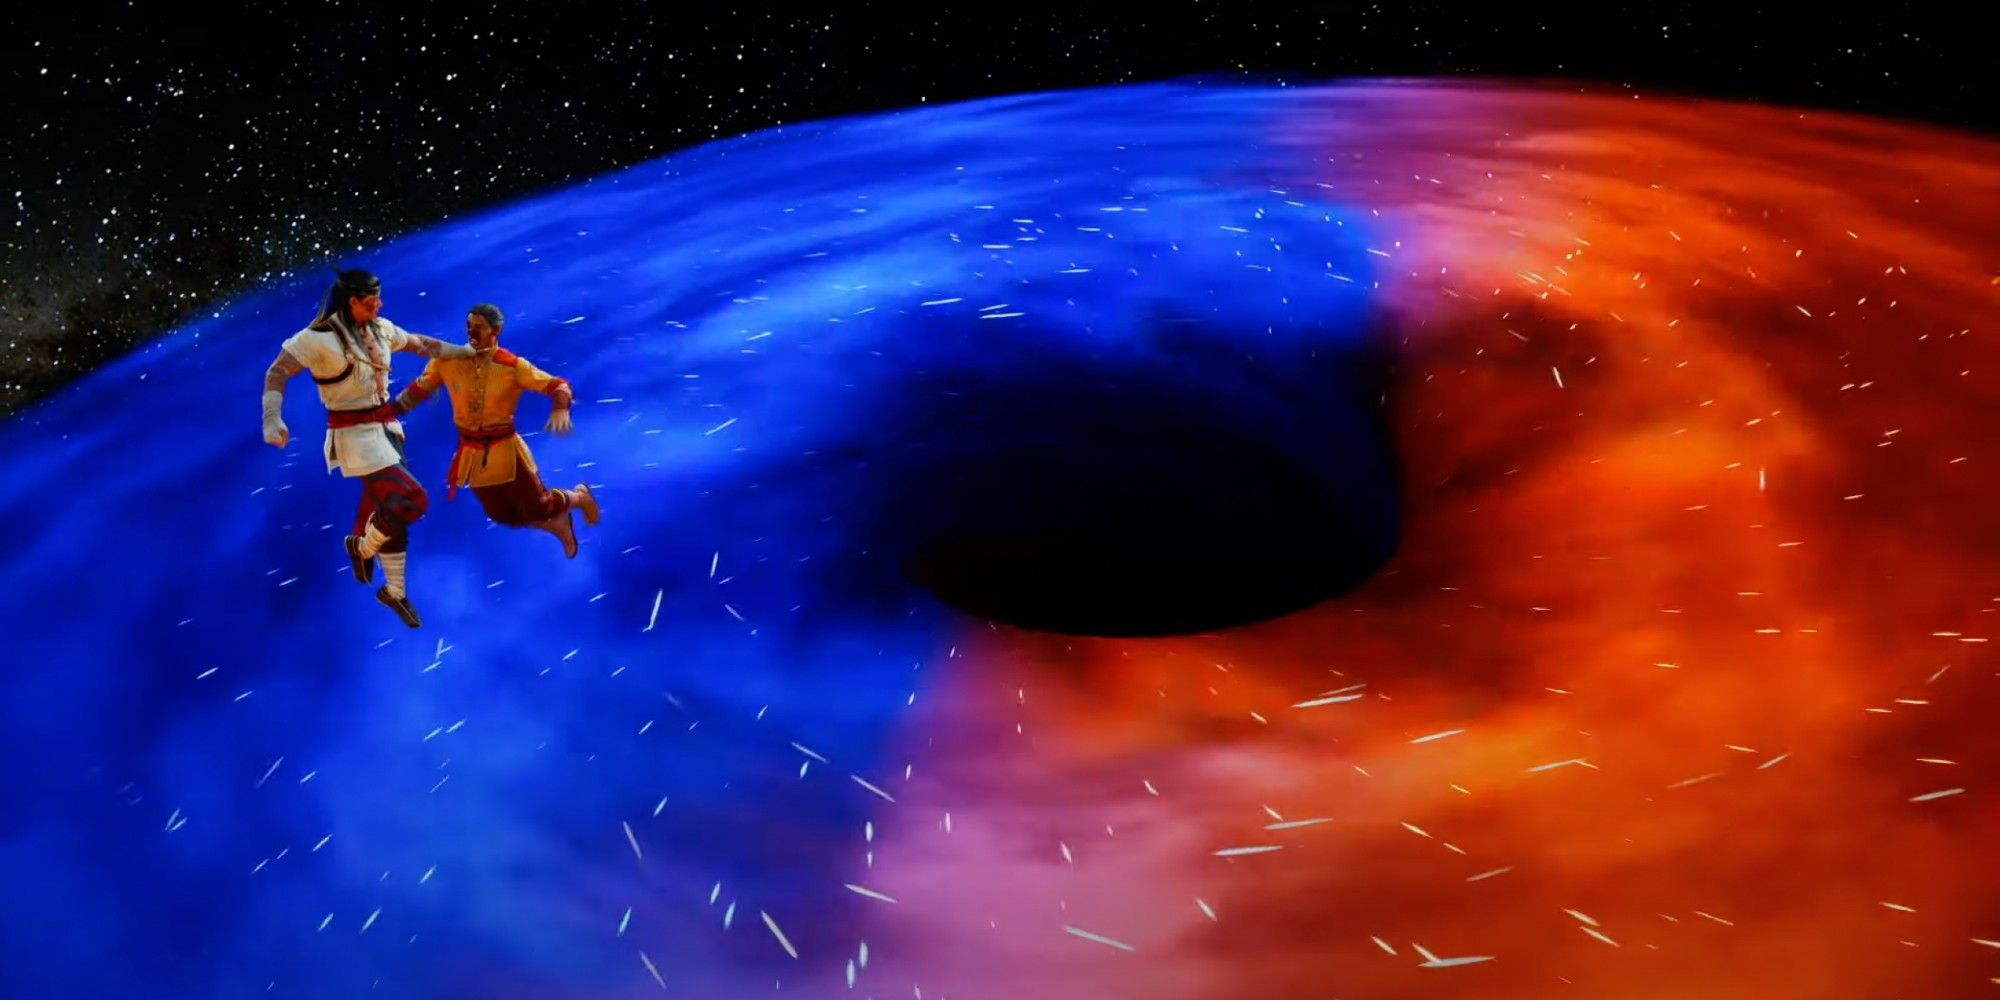 Liu Kang holding an enemy over a black hole